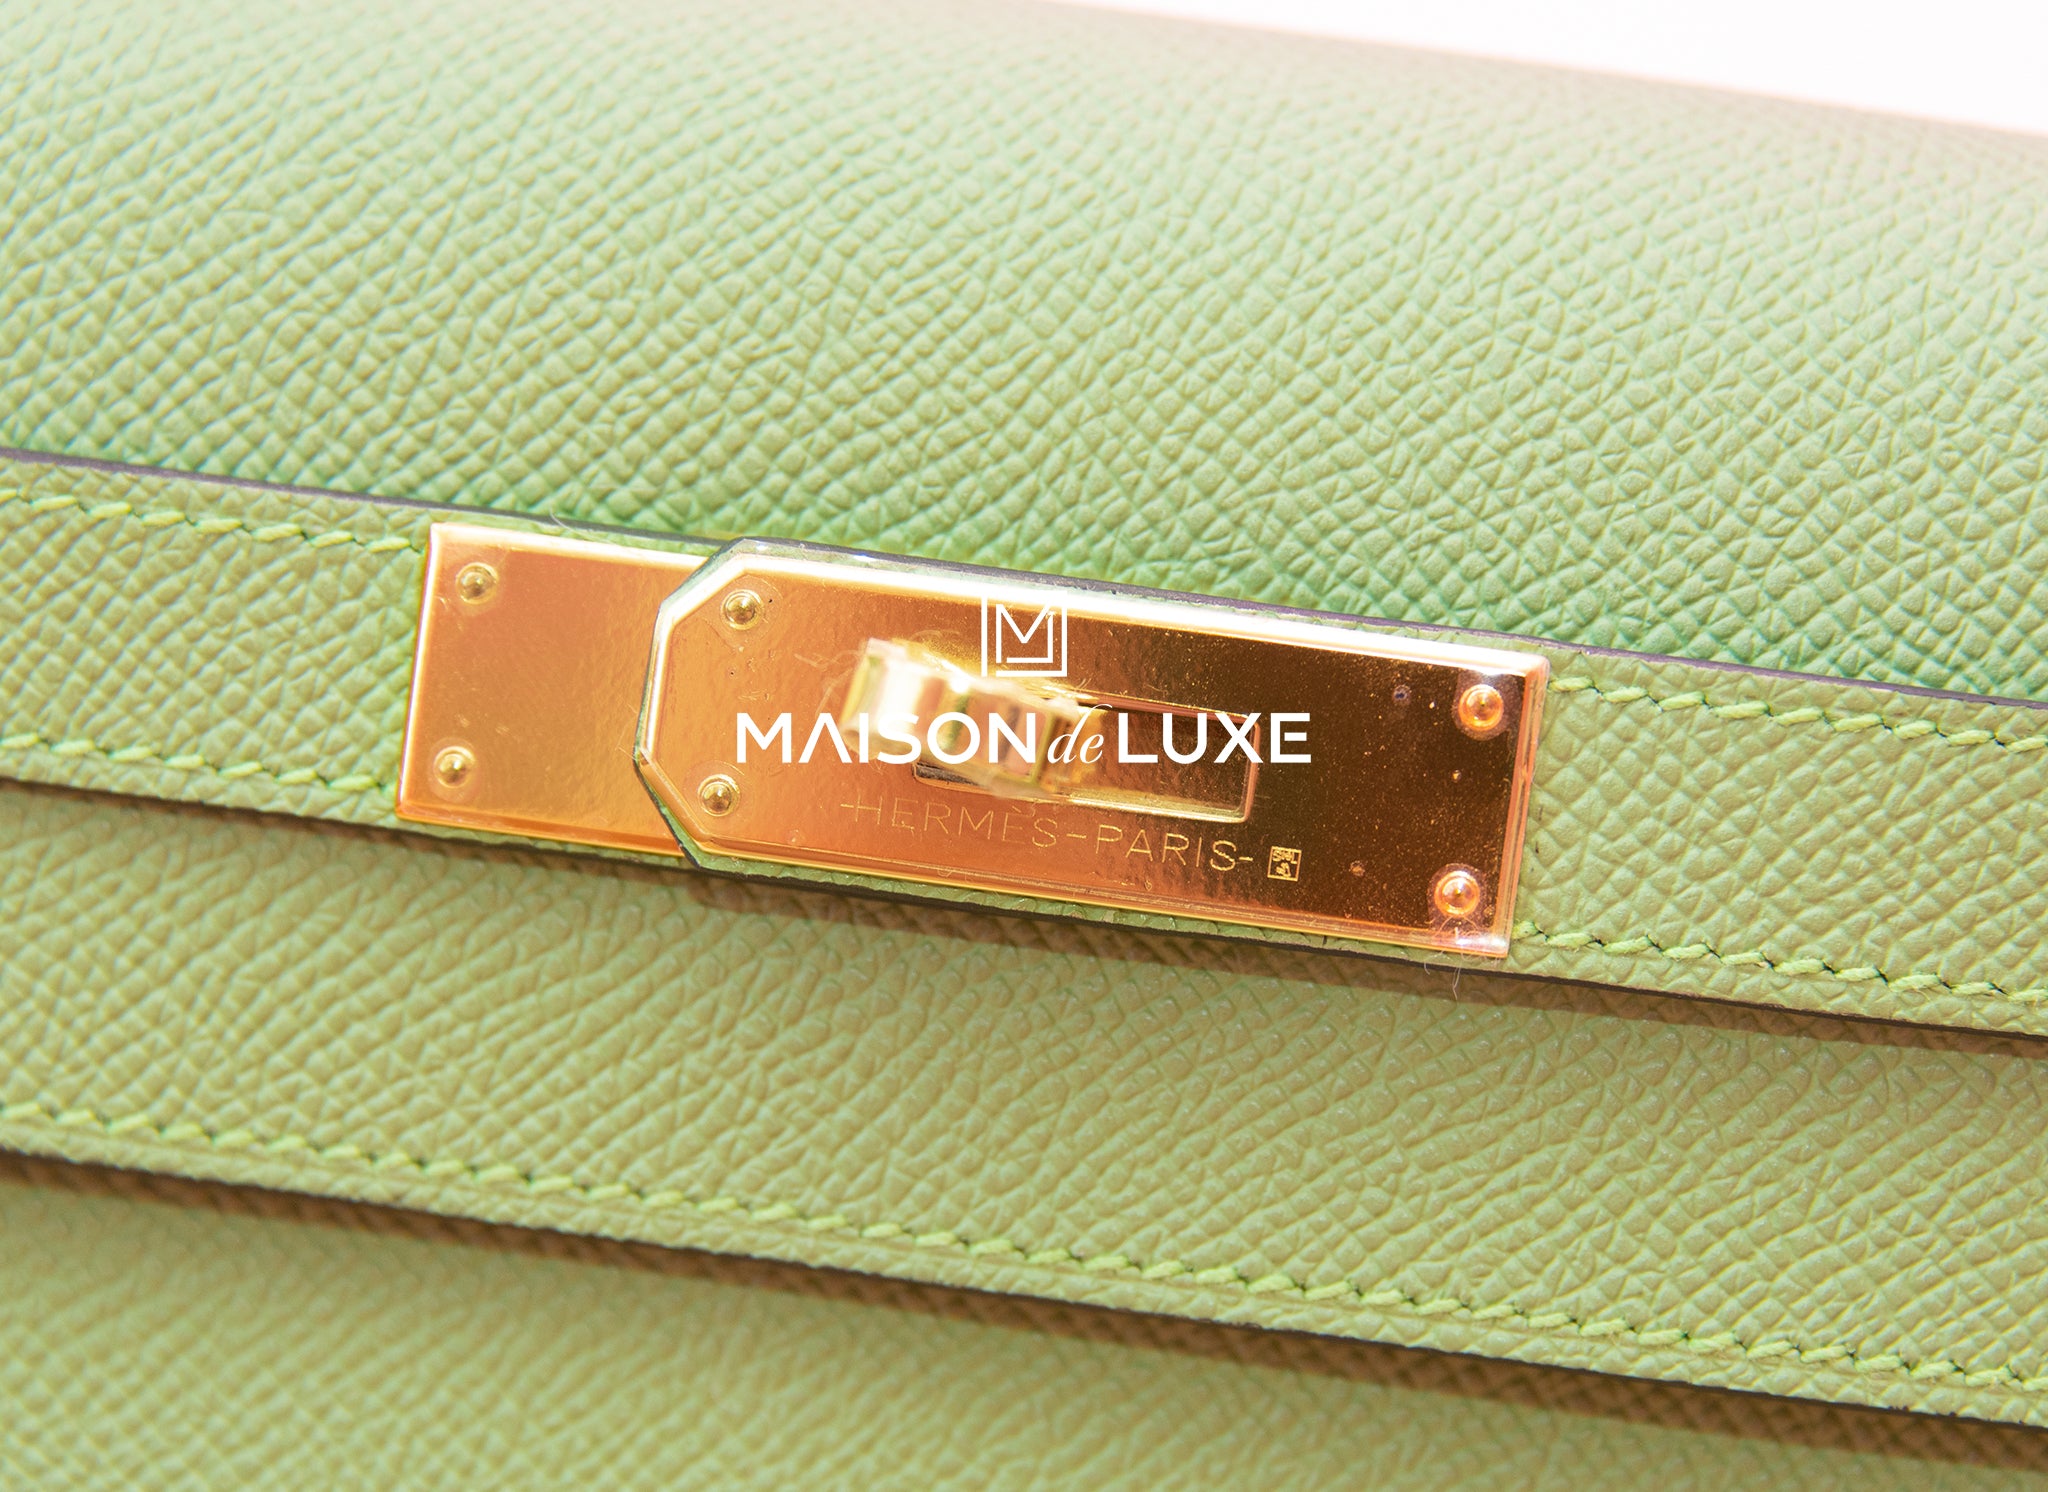 Hermès 25cm Kelly Sellier, Vert Criquet Epsom Leather, Gold Hardware, 2020/Y 🗝 #hermes #priveporter #kellysellier #vertcriquet #birkin